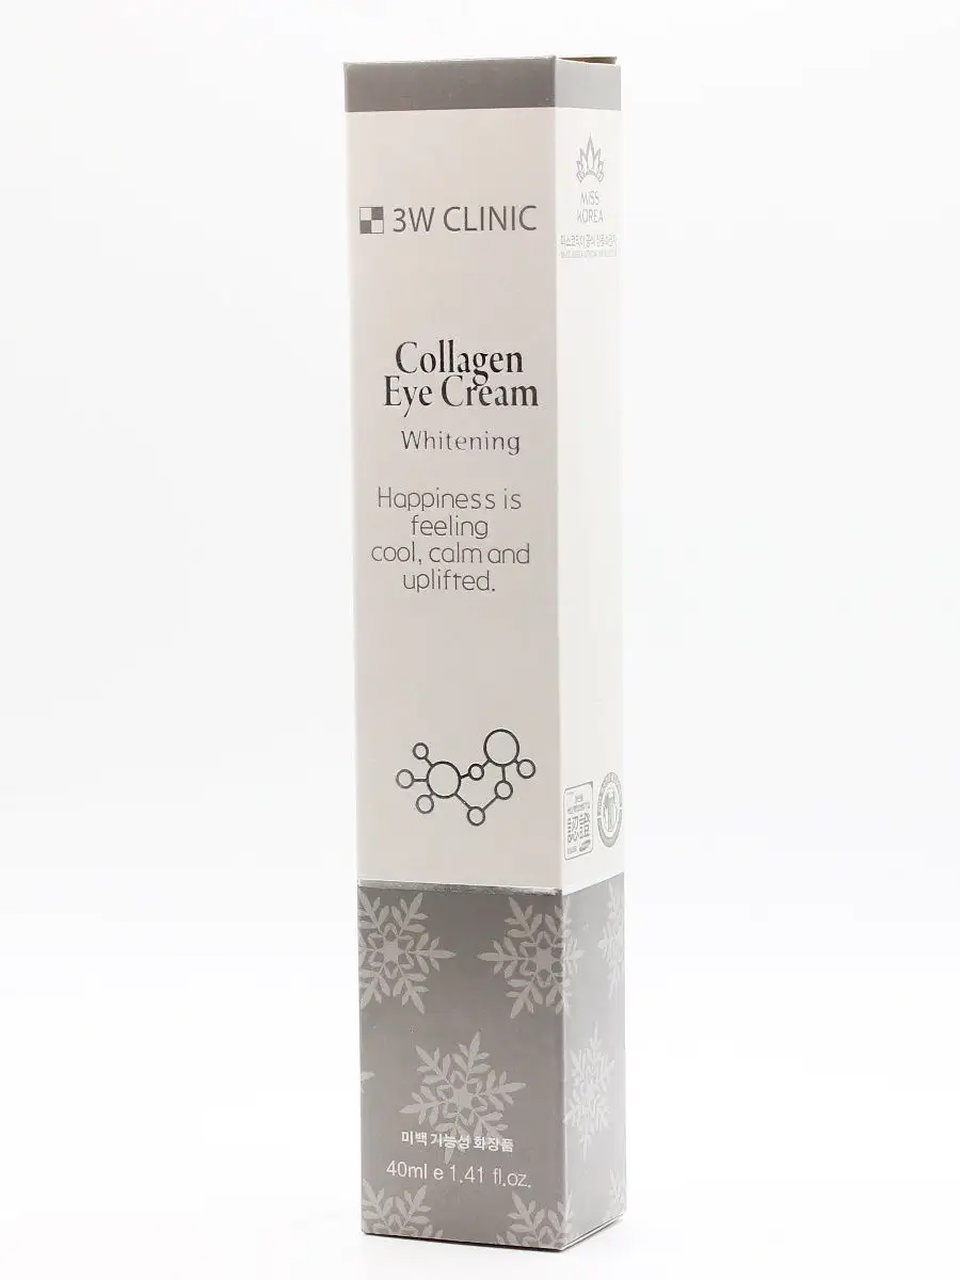 3W Clinic Крем для глаз с коллагеном осветляющий - Collagen eye cream whitening, 40мл - 250 ₽, заказать онлайн.